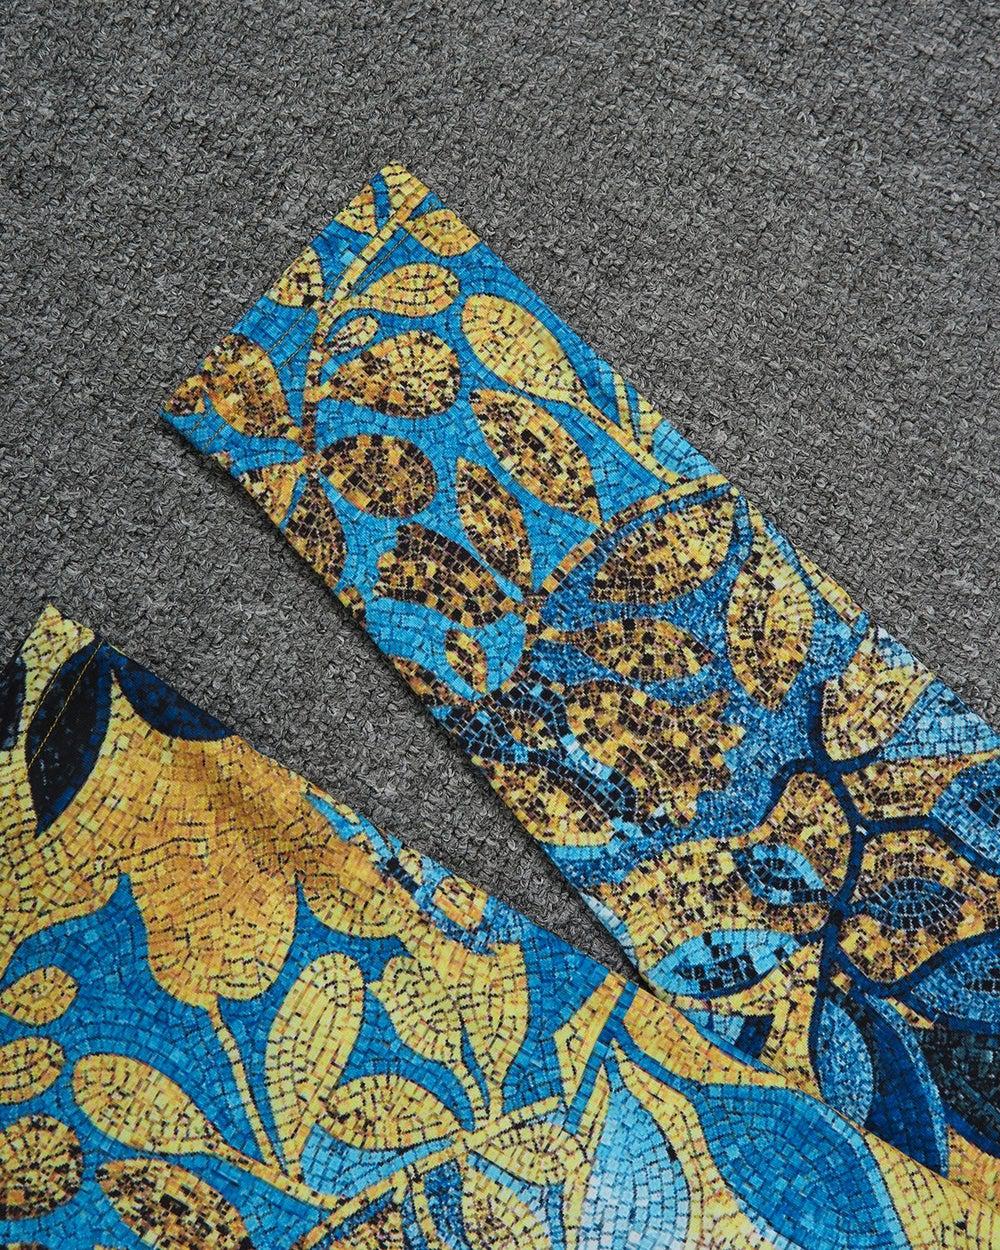 Gold Foil Blue Floral Print Long-Sleeve Top